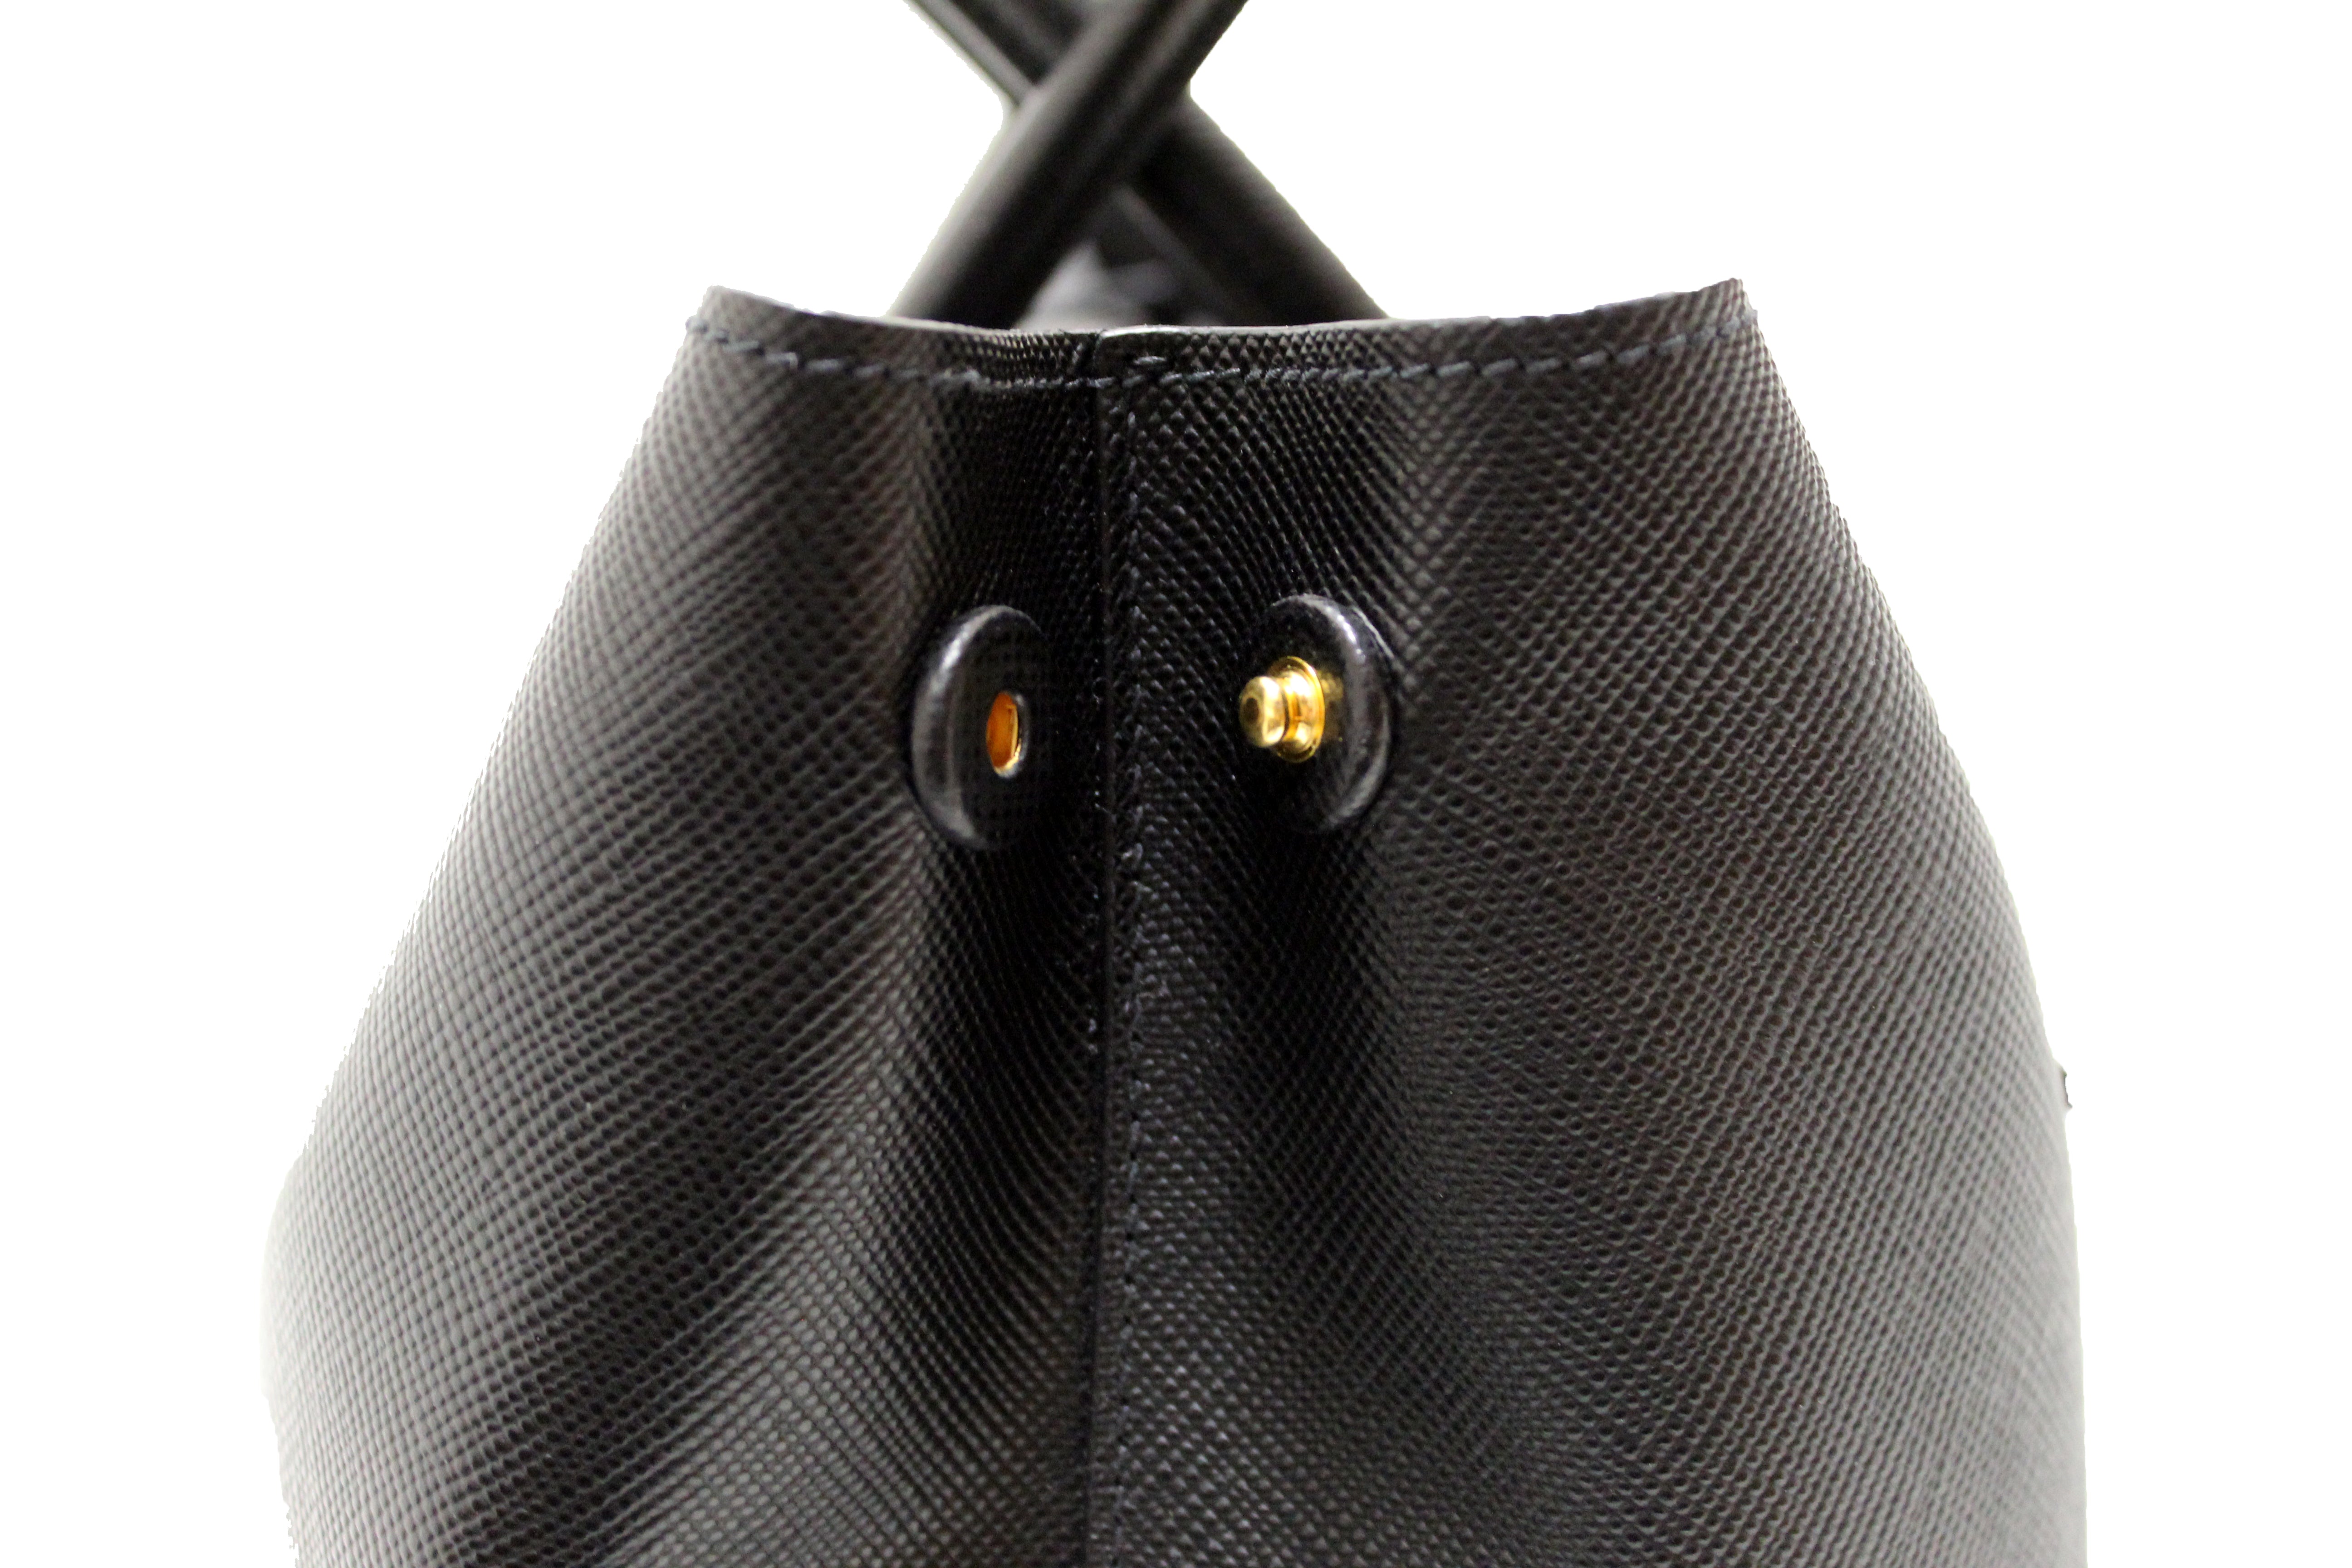 Authentic Prada Black Saffiano Leather Buckle Tote Bag